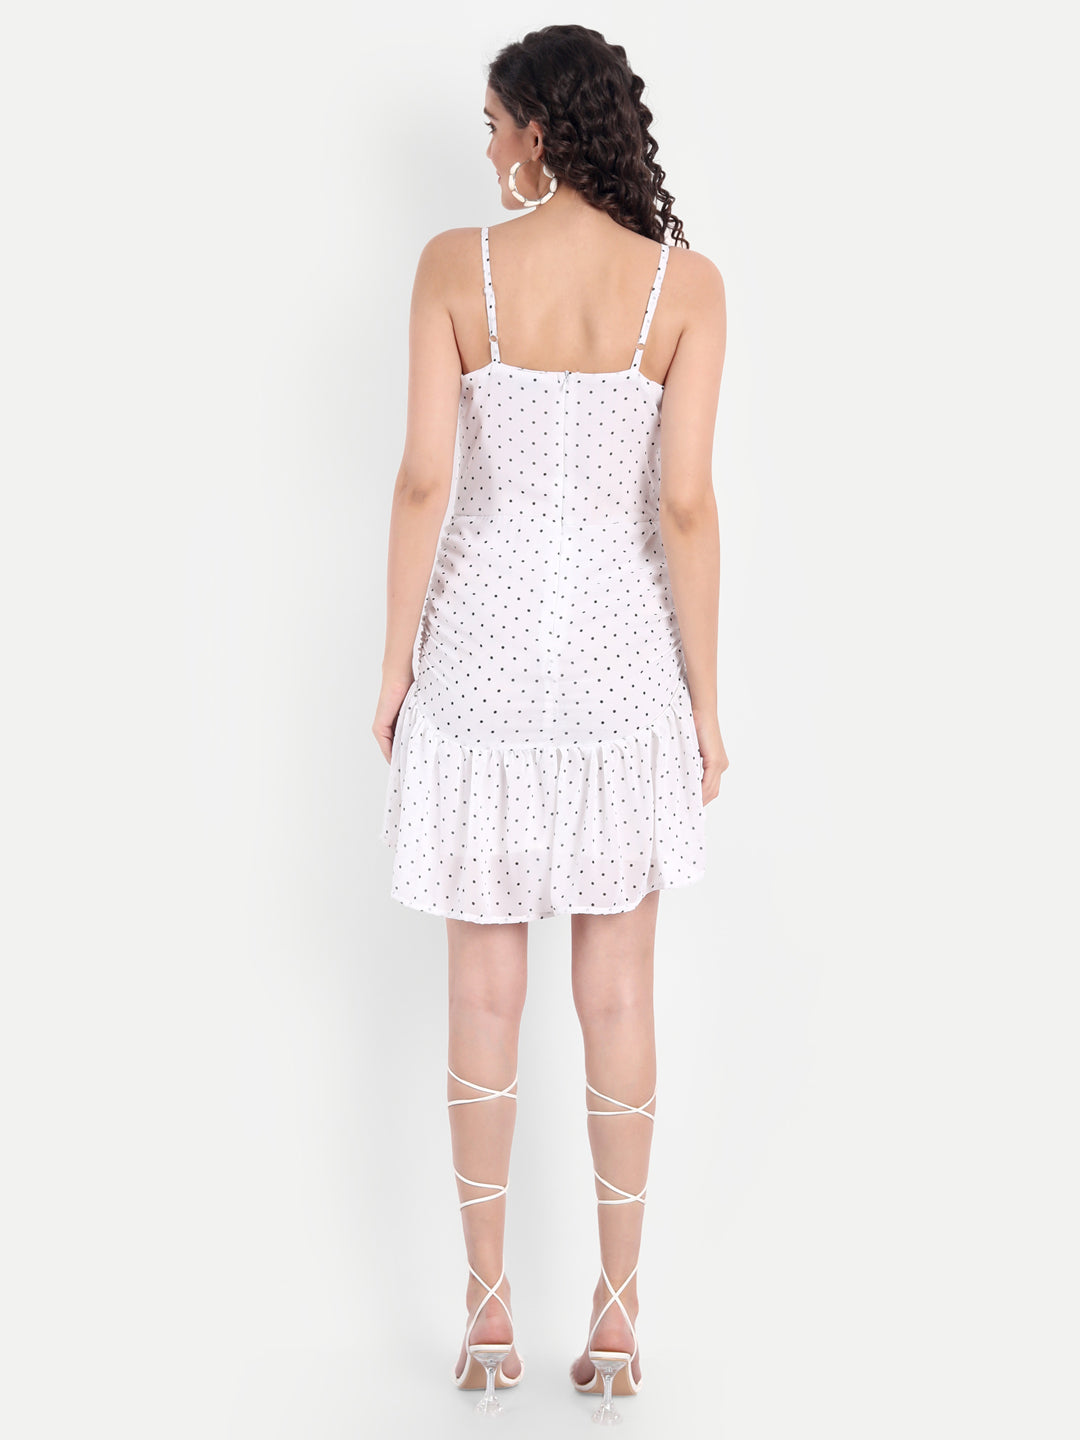 Clara white polka dot dress - Emprall 